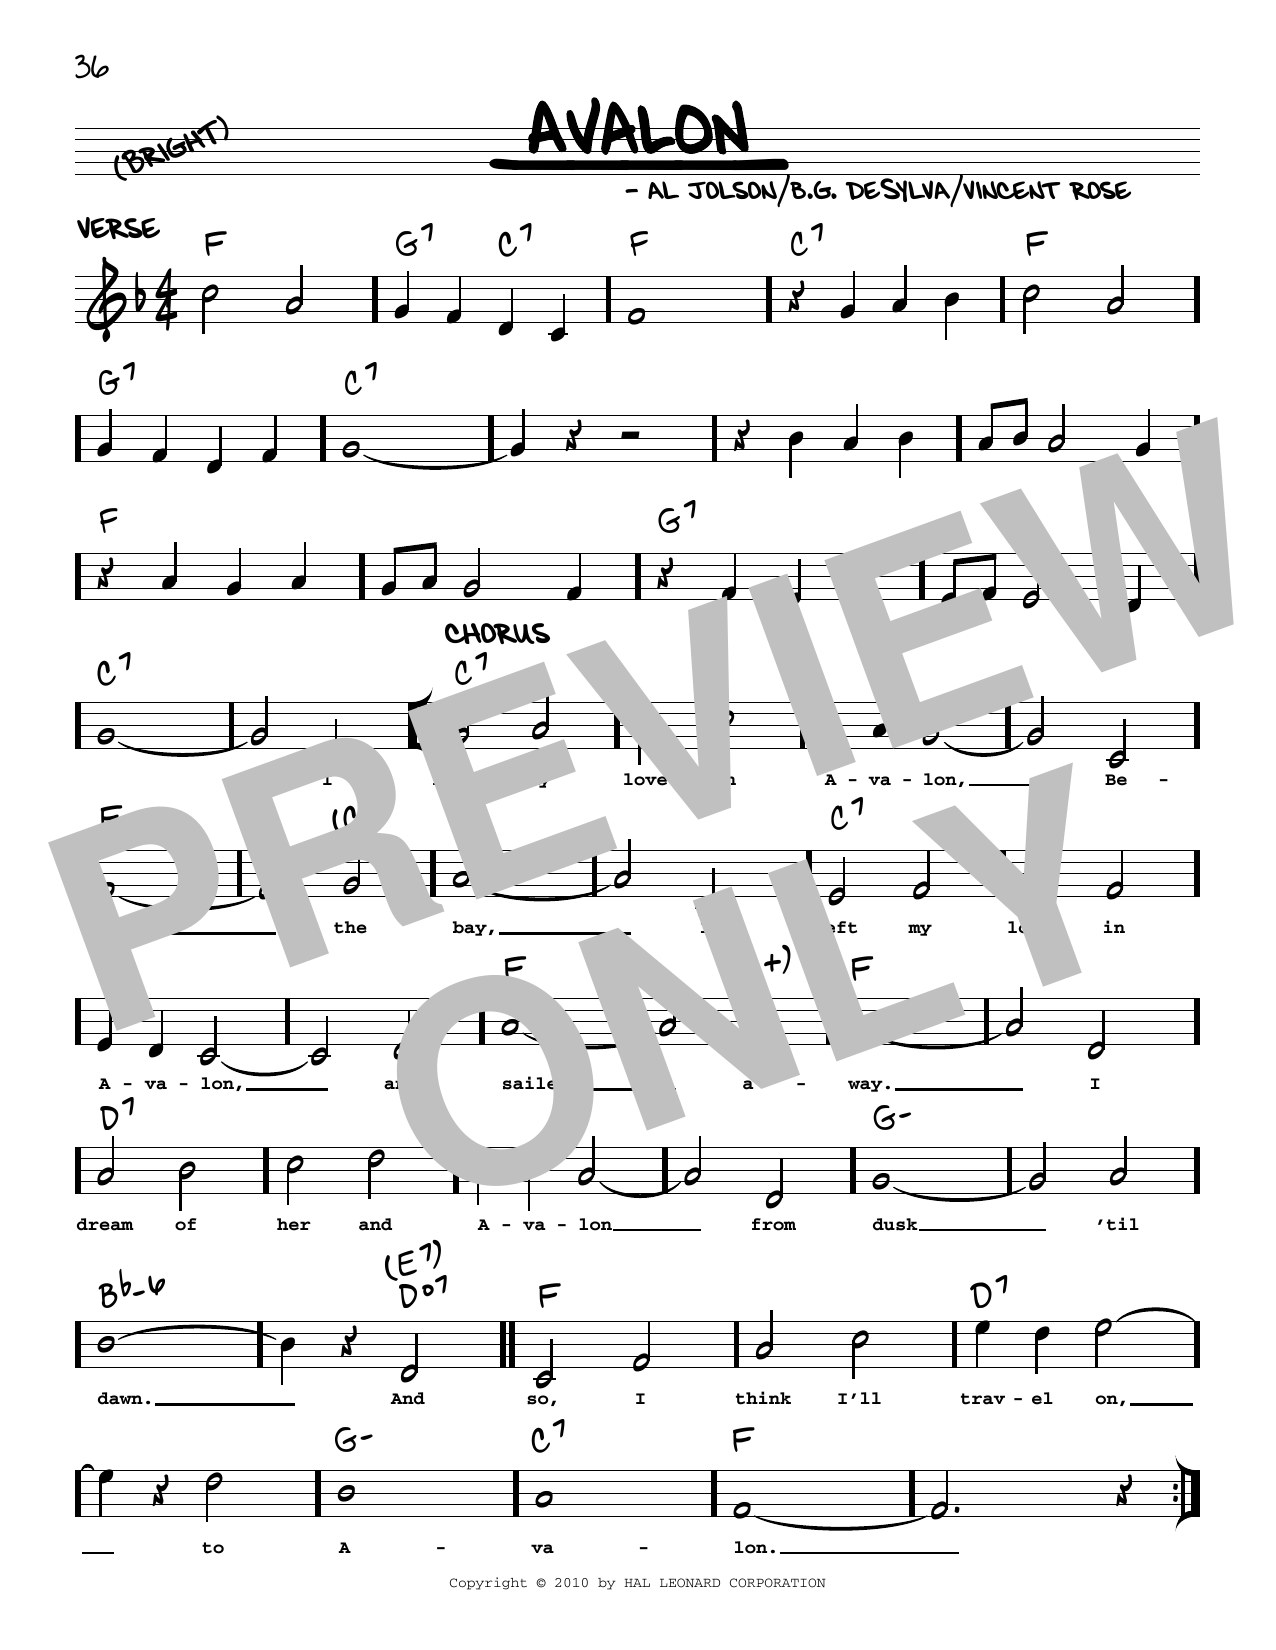 Al Jolson Avalon (arr. Robert Rawlins) Sheet Music Notes & Chords for Real Book – Melody, Lyrics & Chords - Download or Print PDF